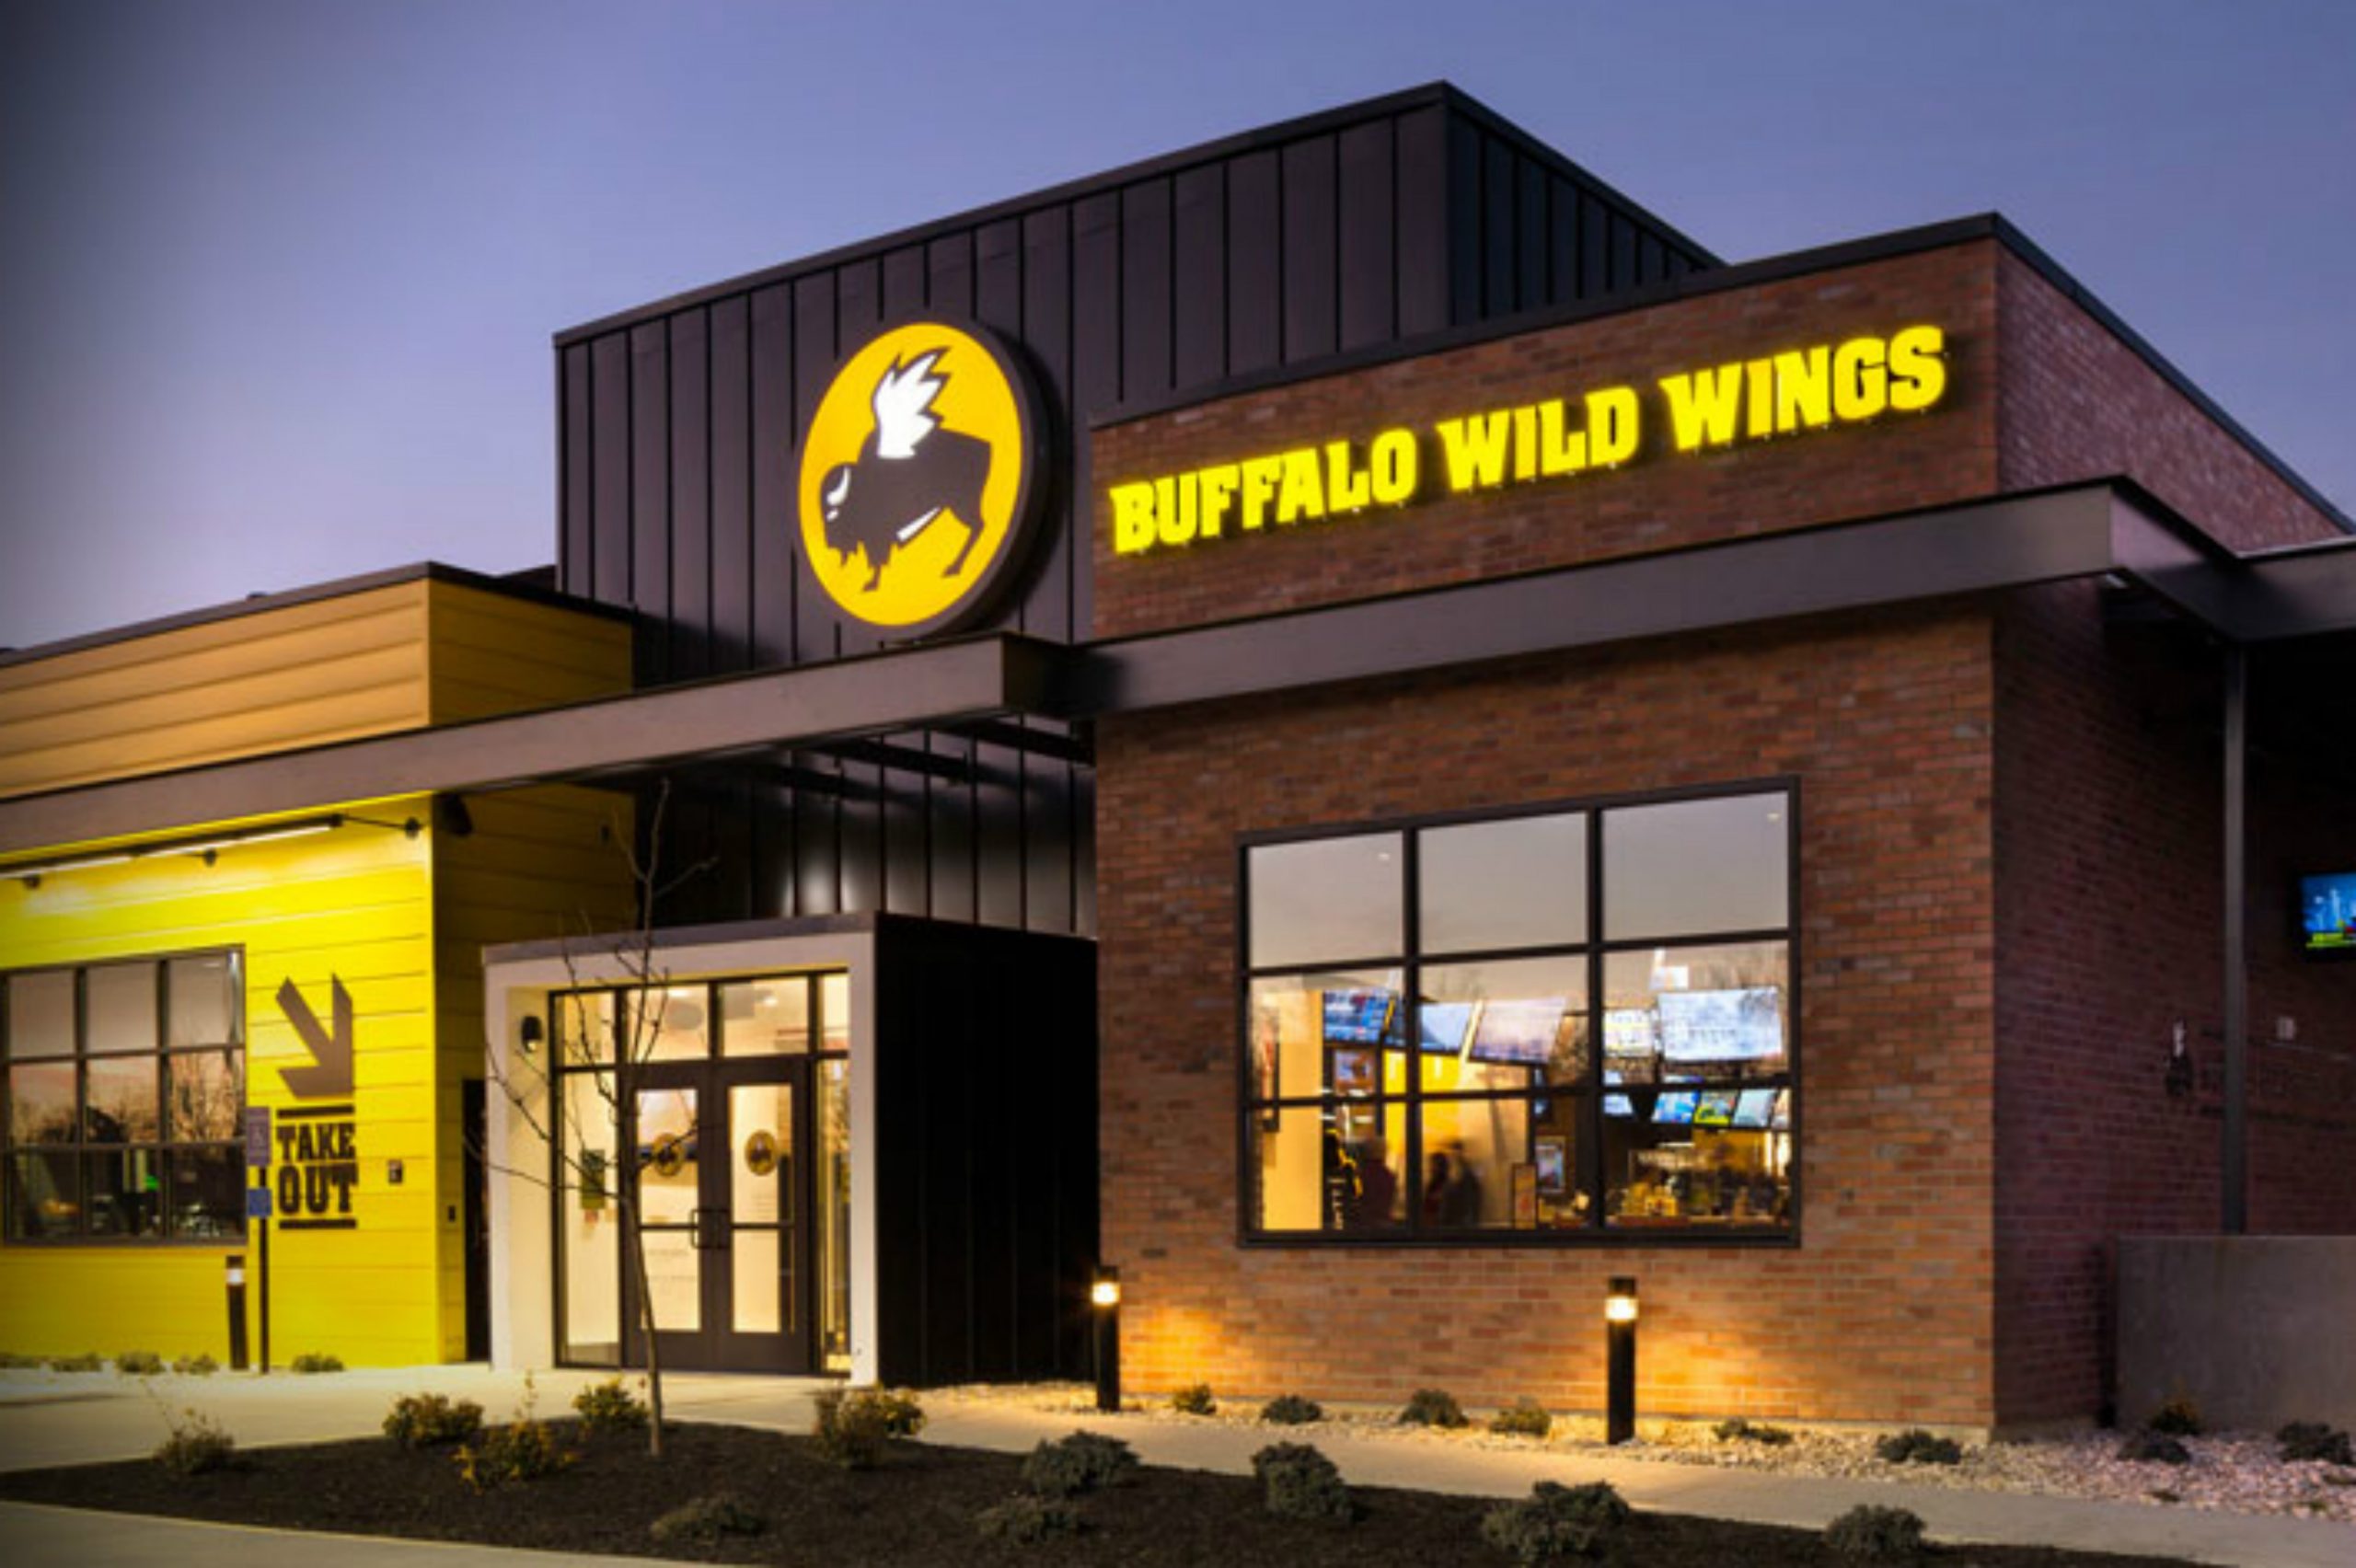 Buffalo Wild wings